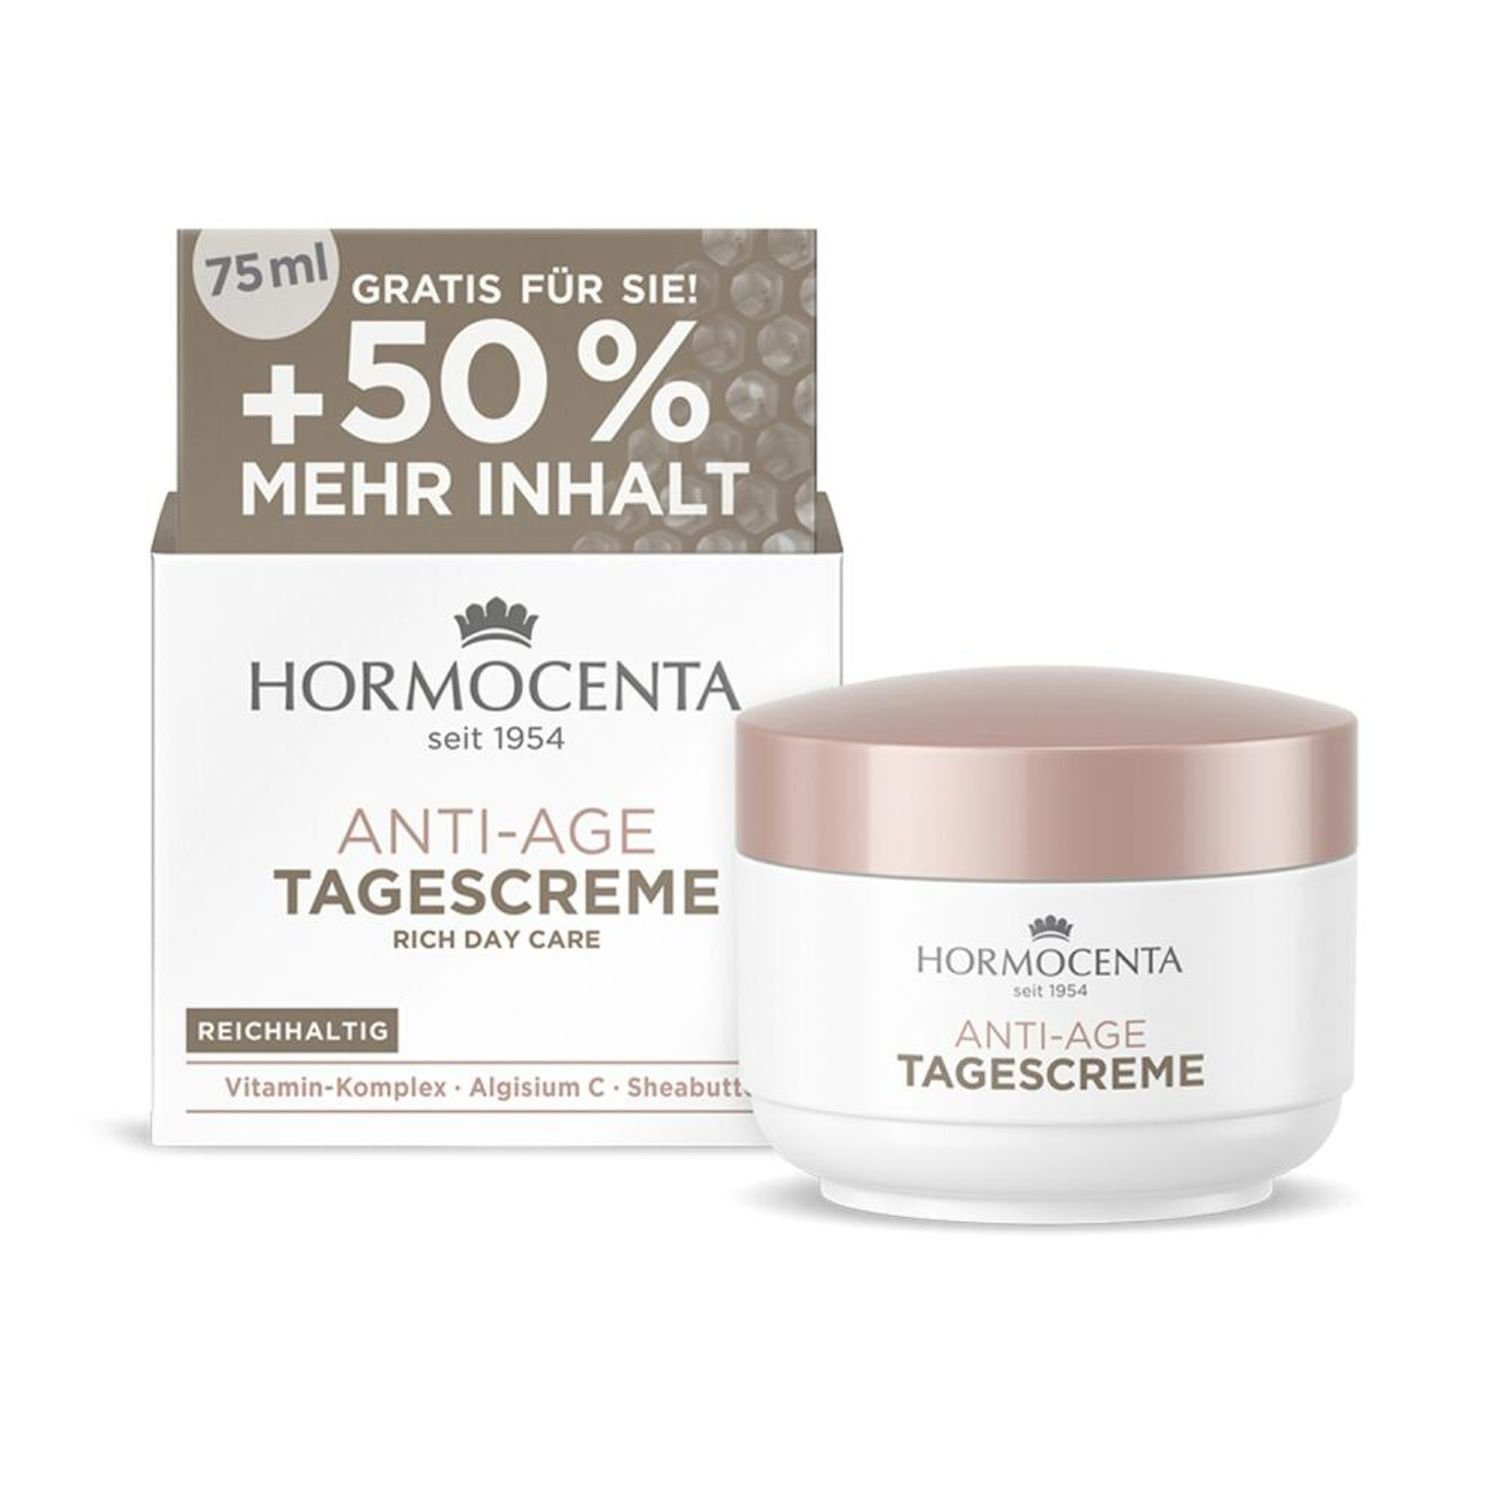 Hormocenta Kosmetik Anti Hormocenta 6x Gesicht Tagescreme 75ml Pflege GmbH Lotion Haut Age Körpercreme